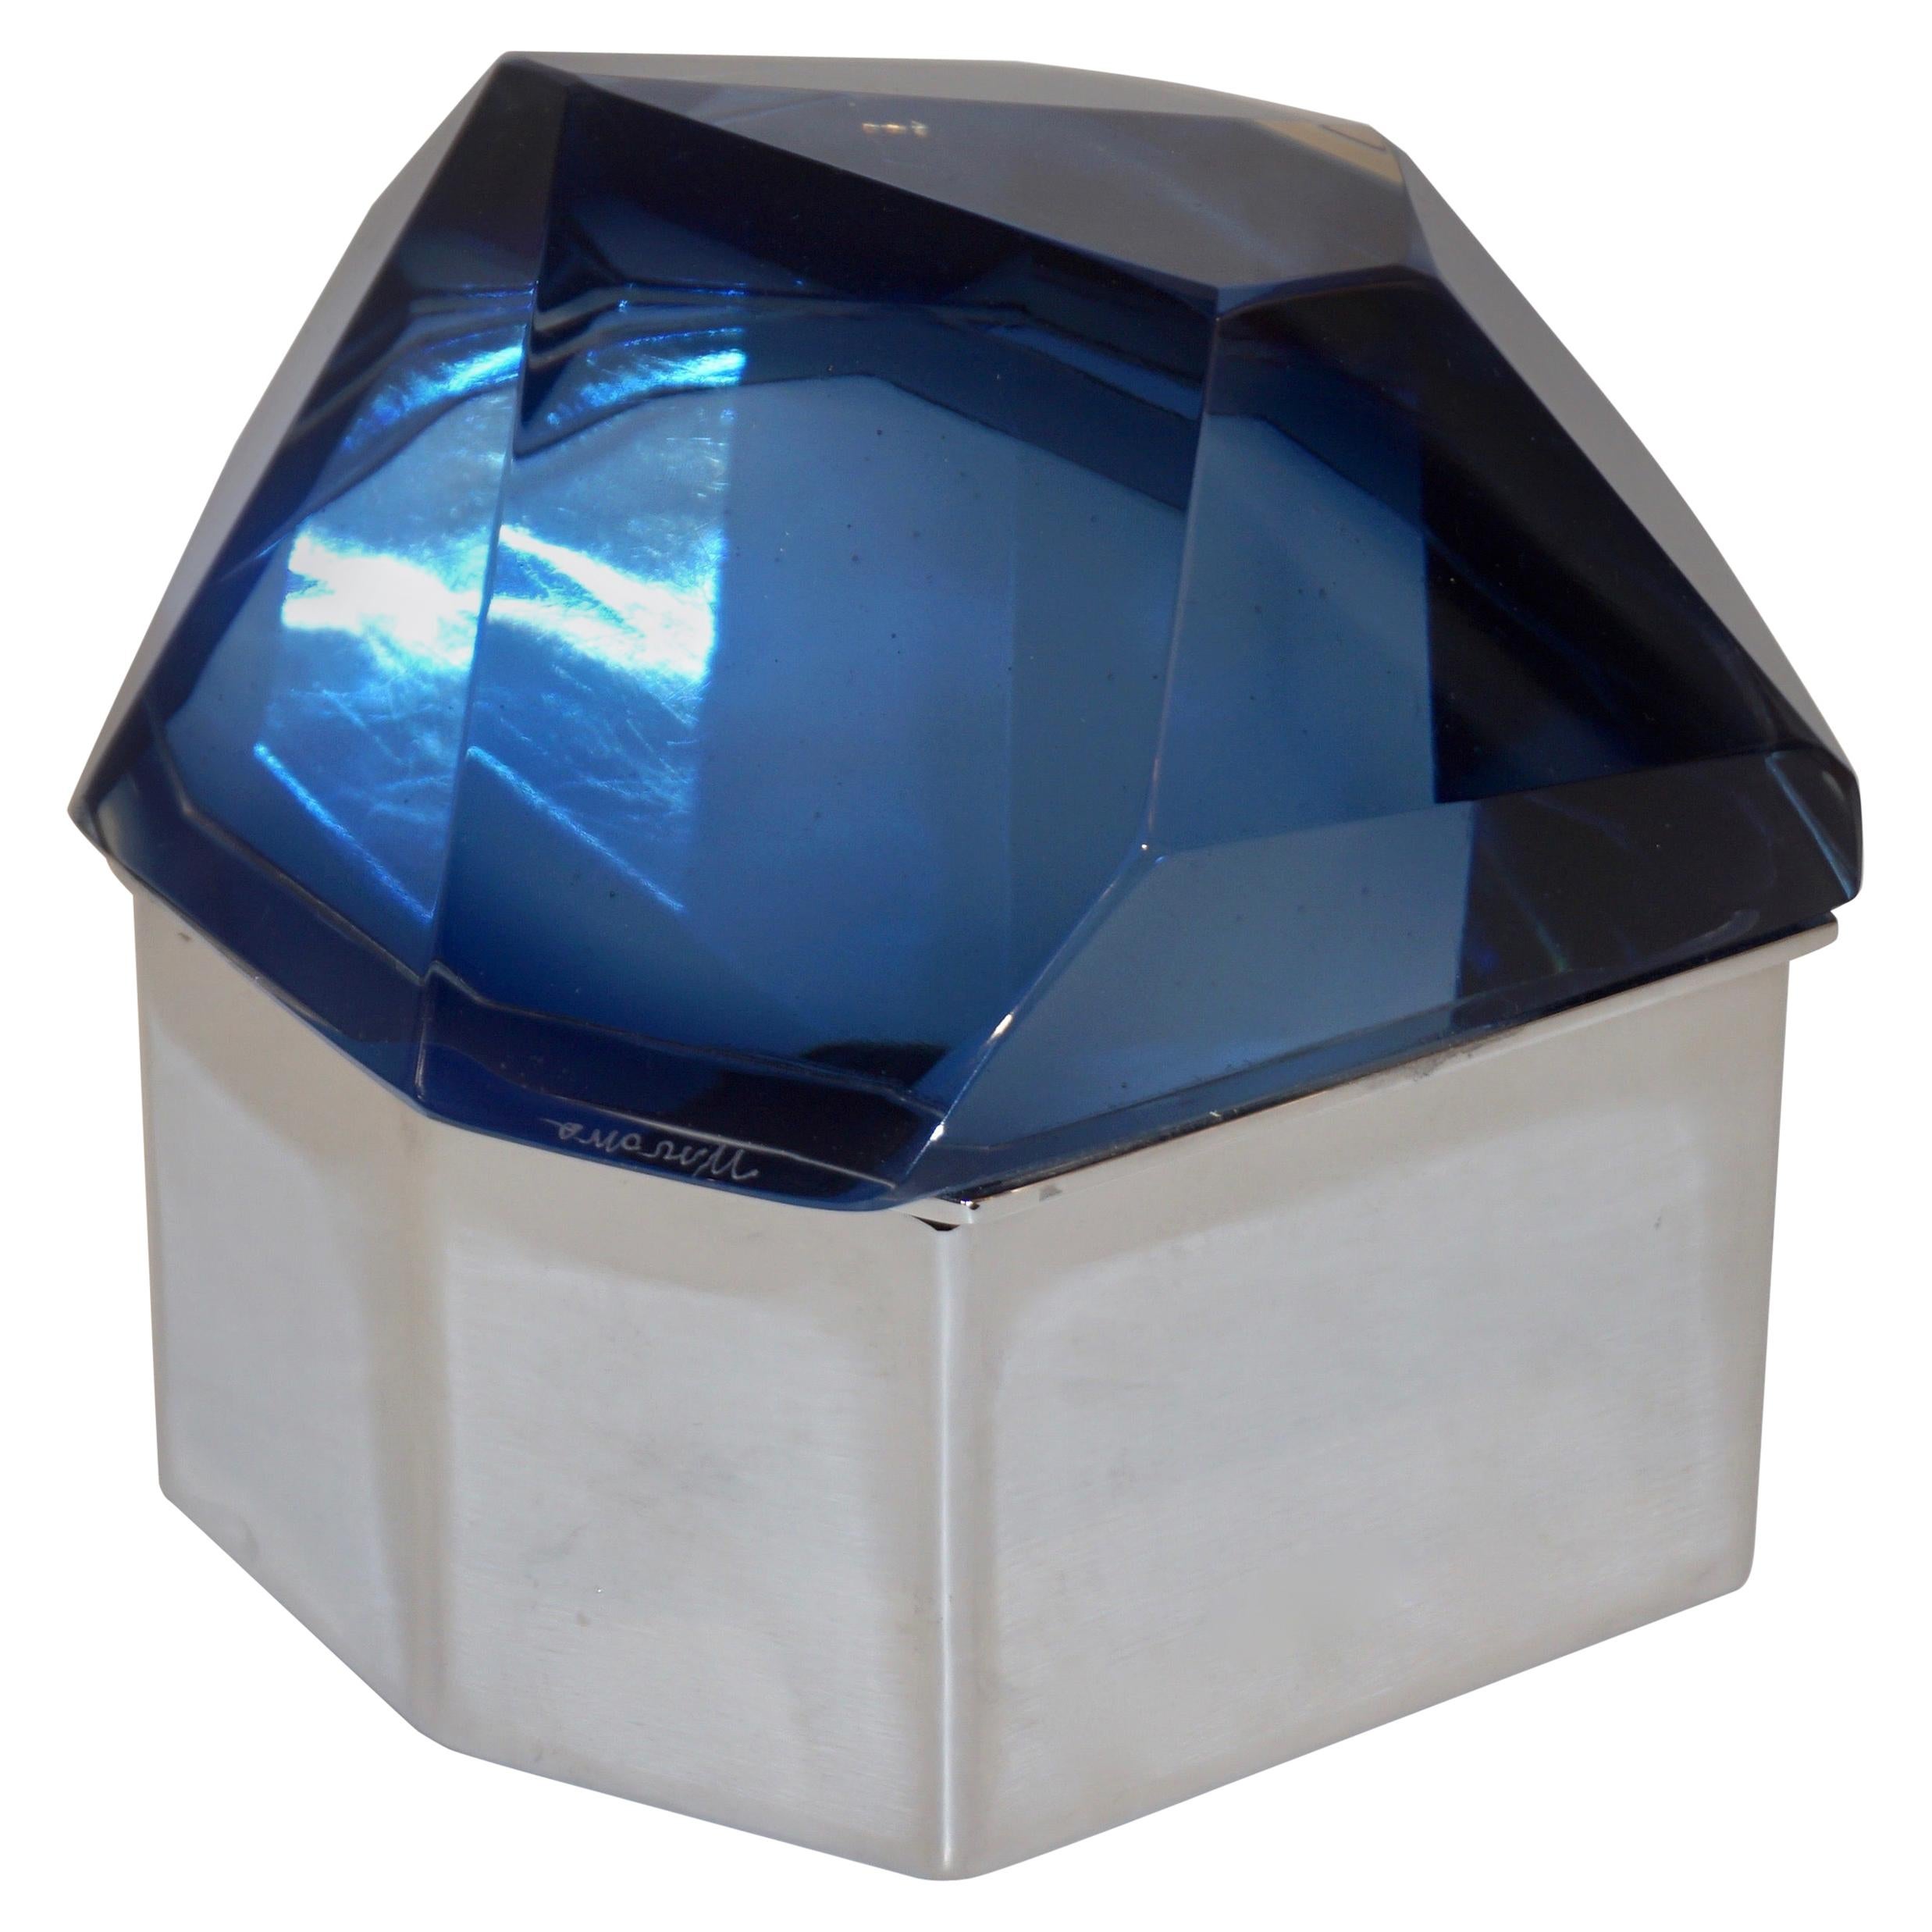 Toso Italian Modern Diamond-Shaped Murano Glass Blue and Nickel Jewel-Like Box